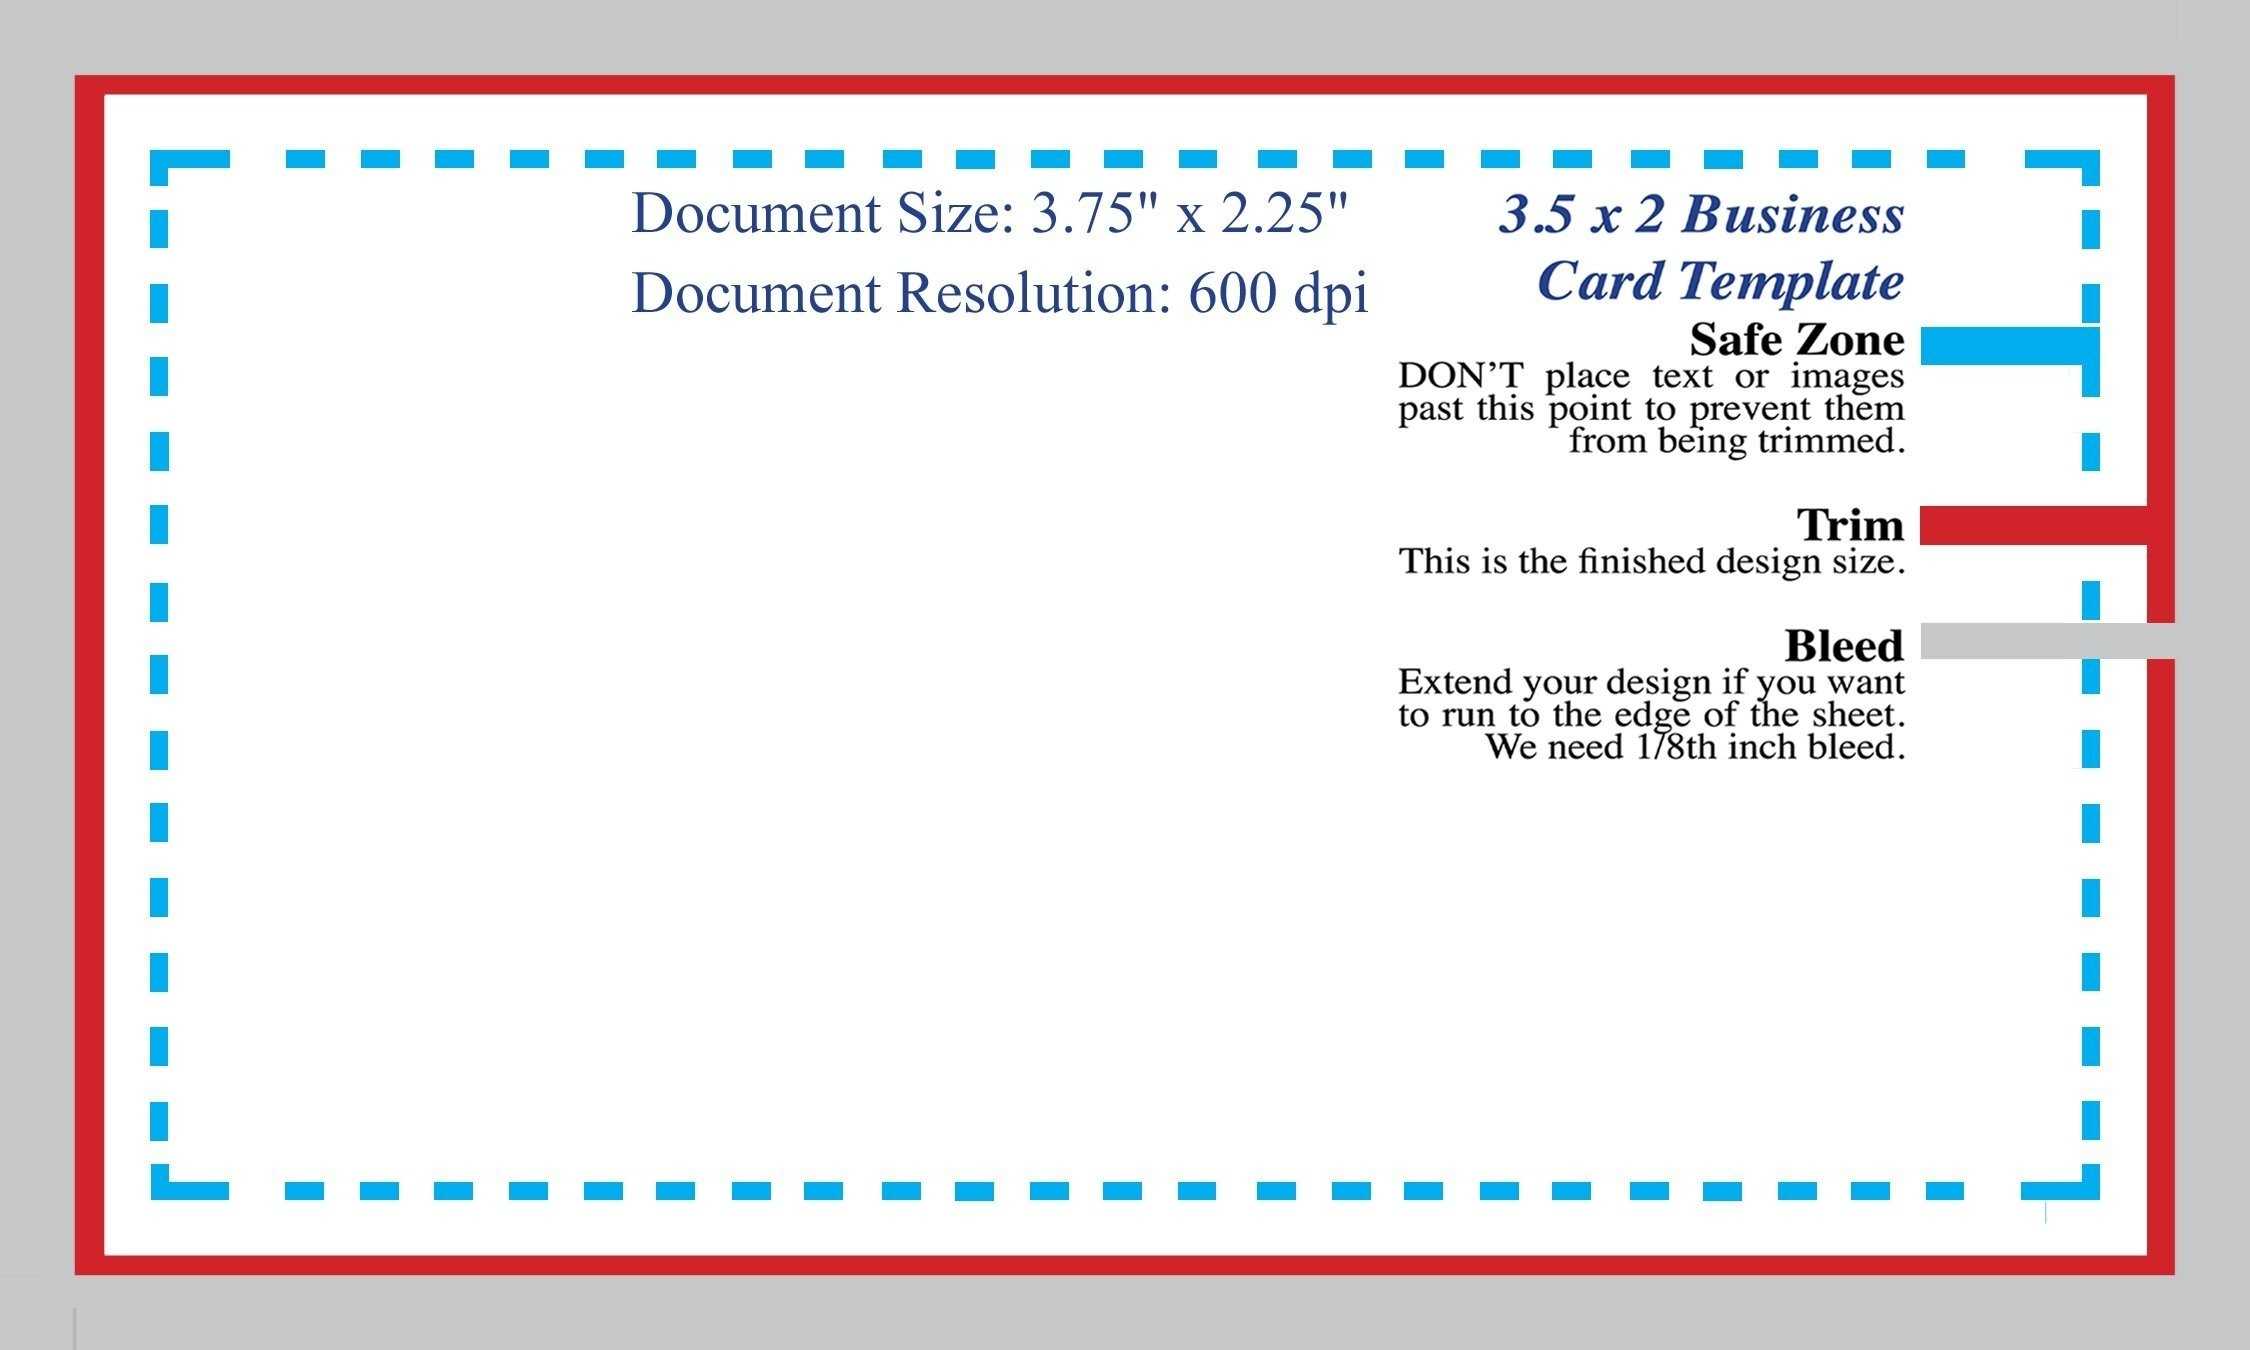 025 Blank Business Card Template Free Ideas Psd Photoshop Or Within Blank Business Card Template Download